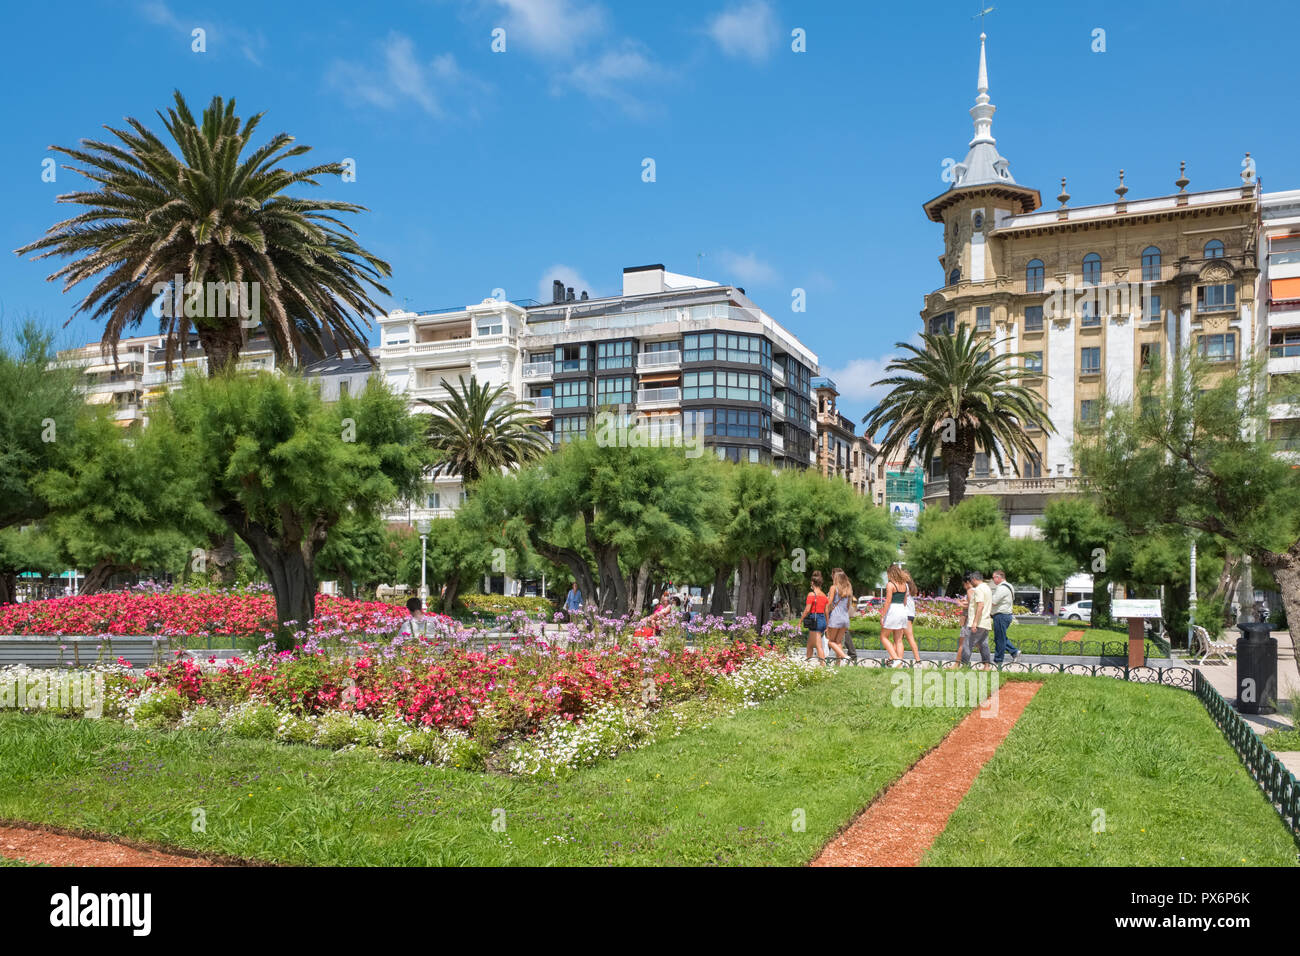 Urban park or public gardens in the centre of San Sebastian, Donostia, Basque Country, Spain, Europe Stock Photo